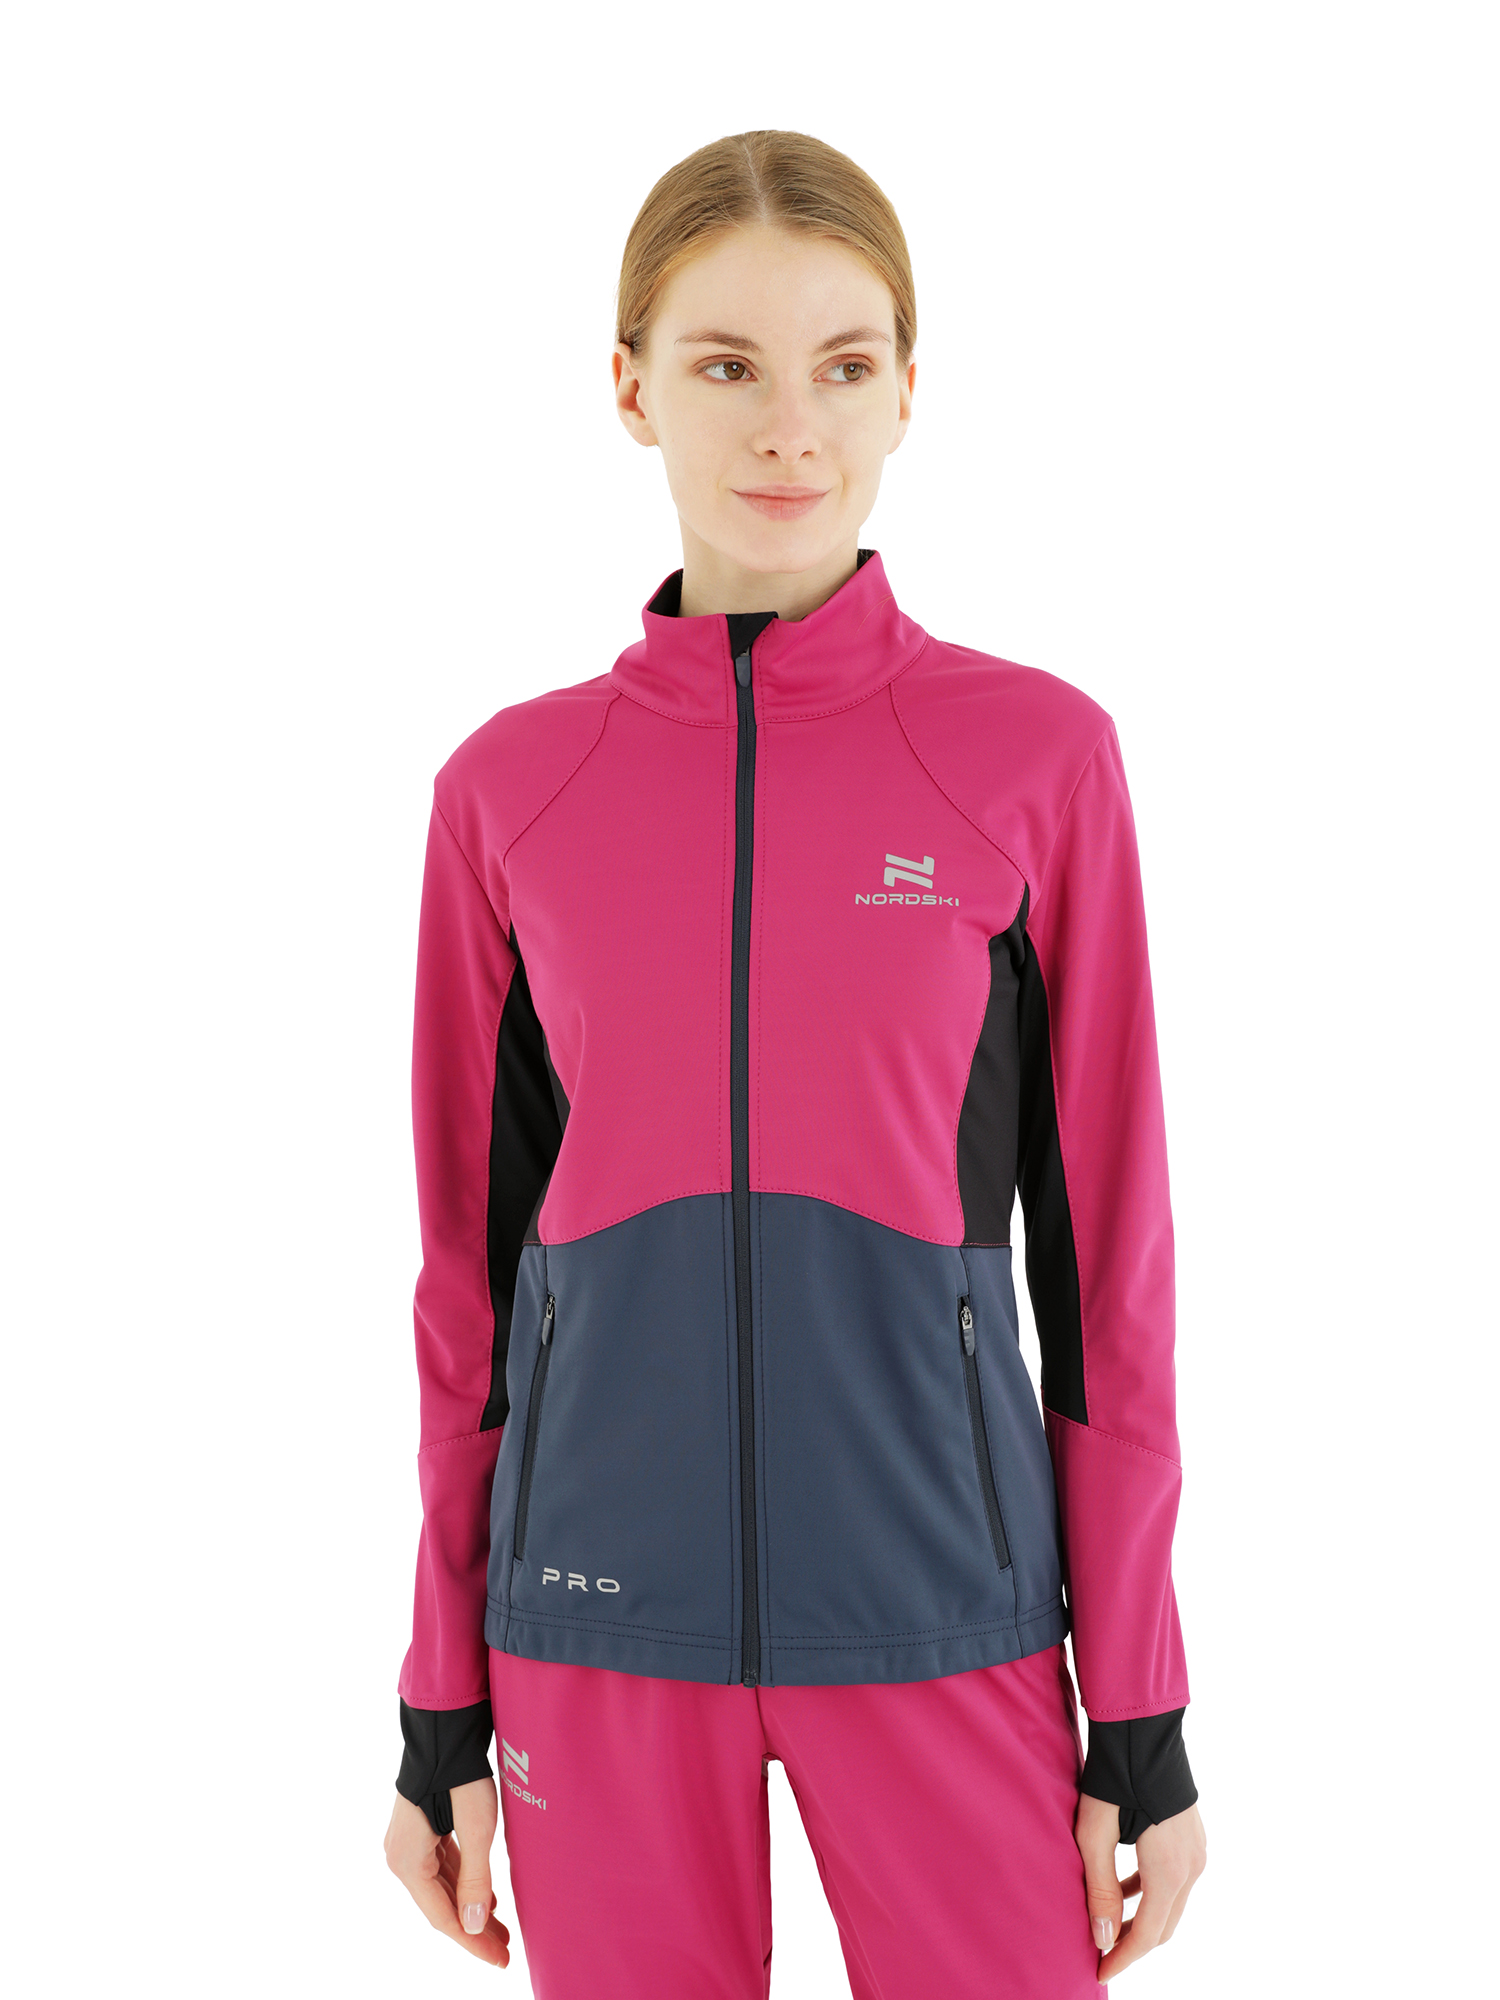 Куртка женская NordSki Pro W розовая XS